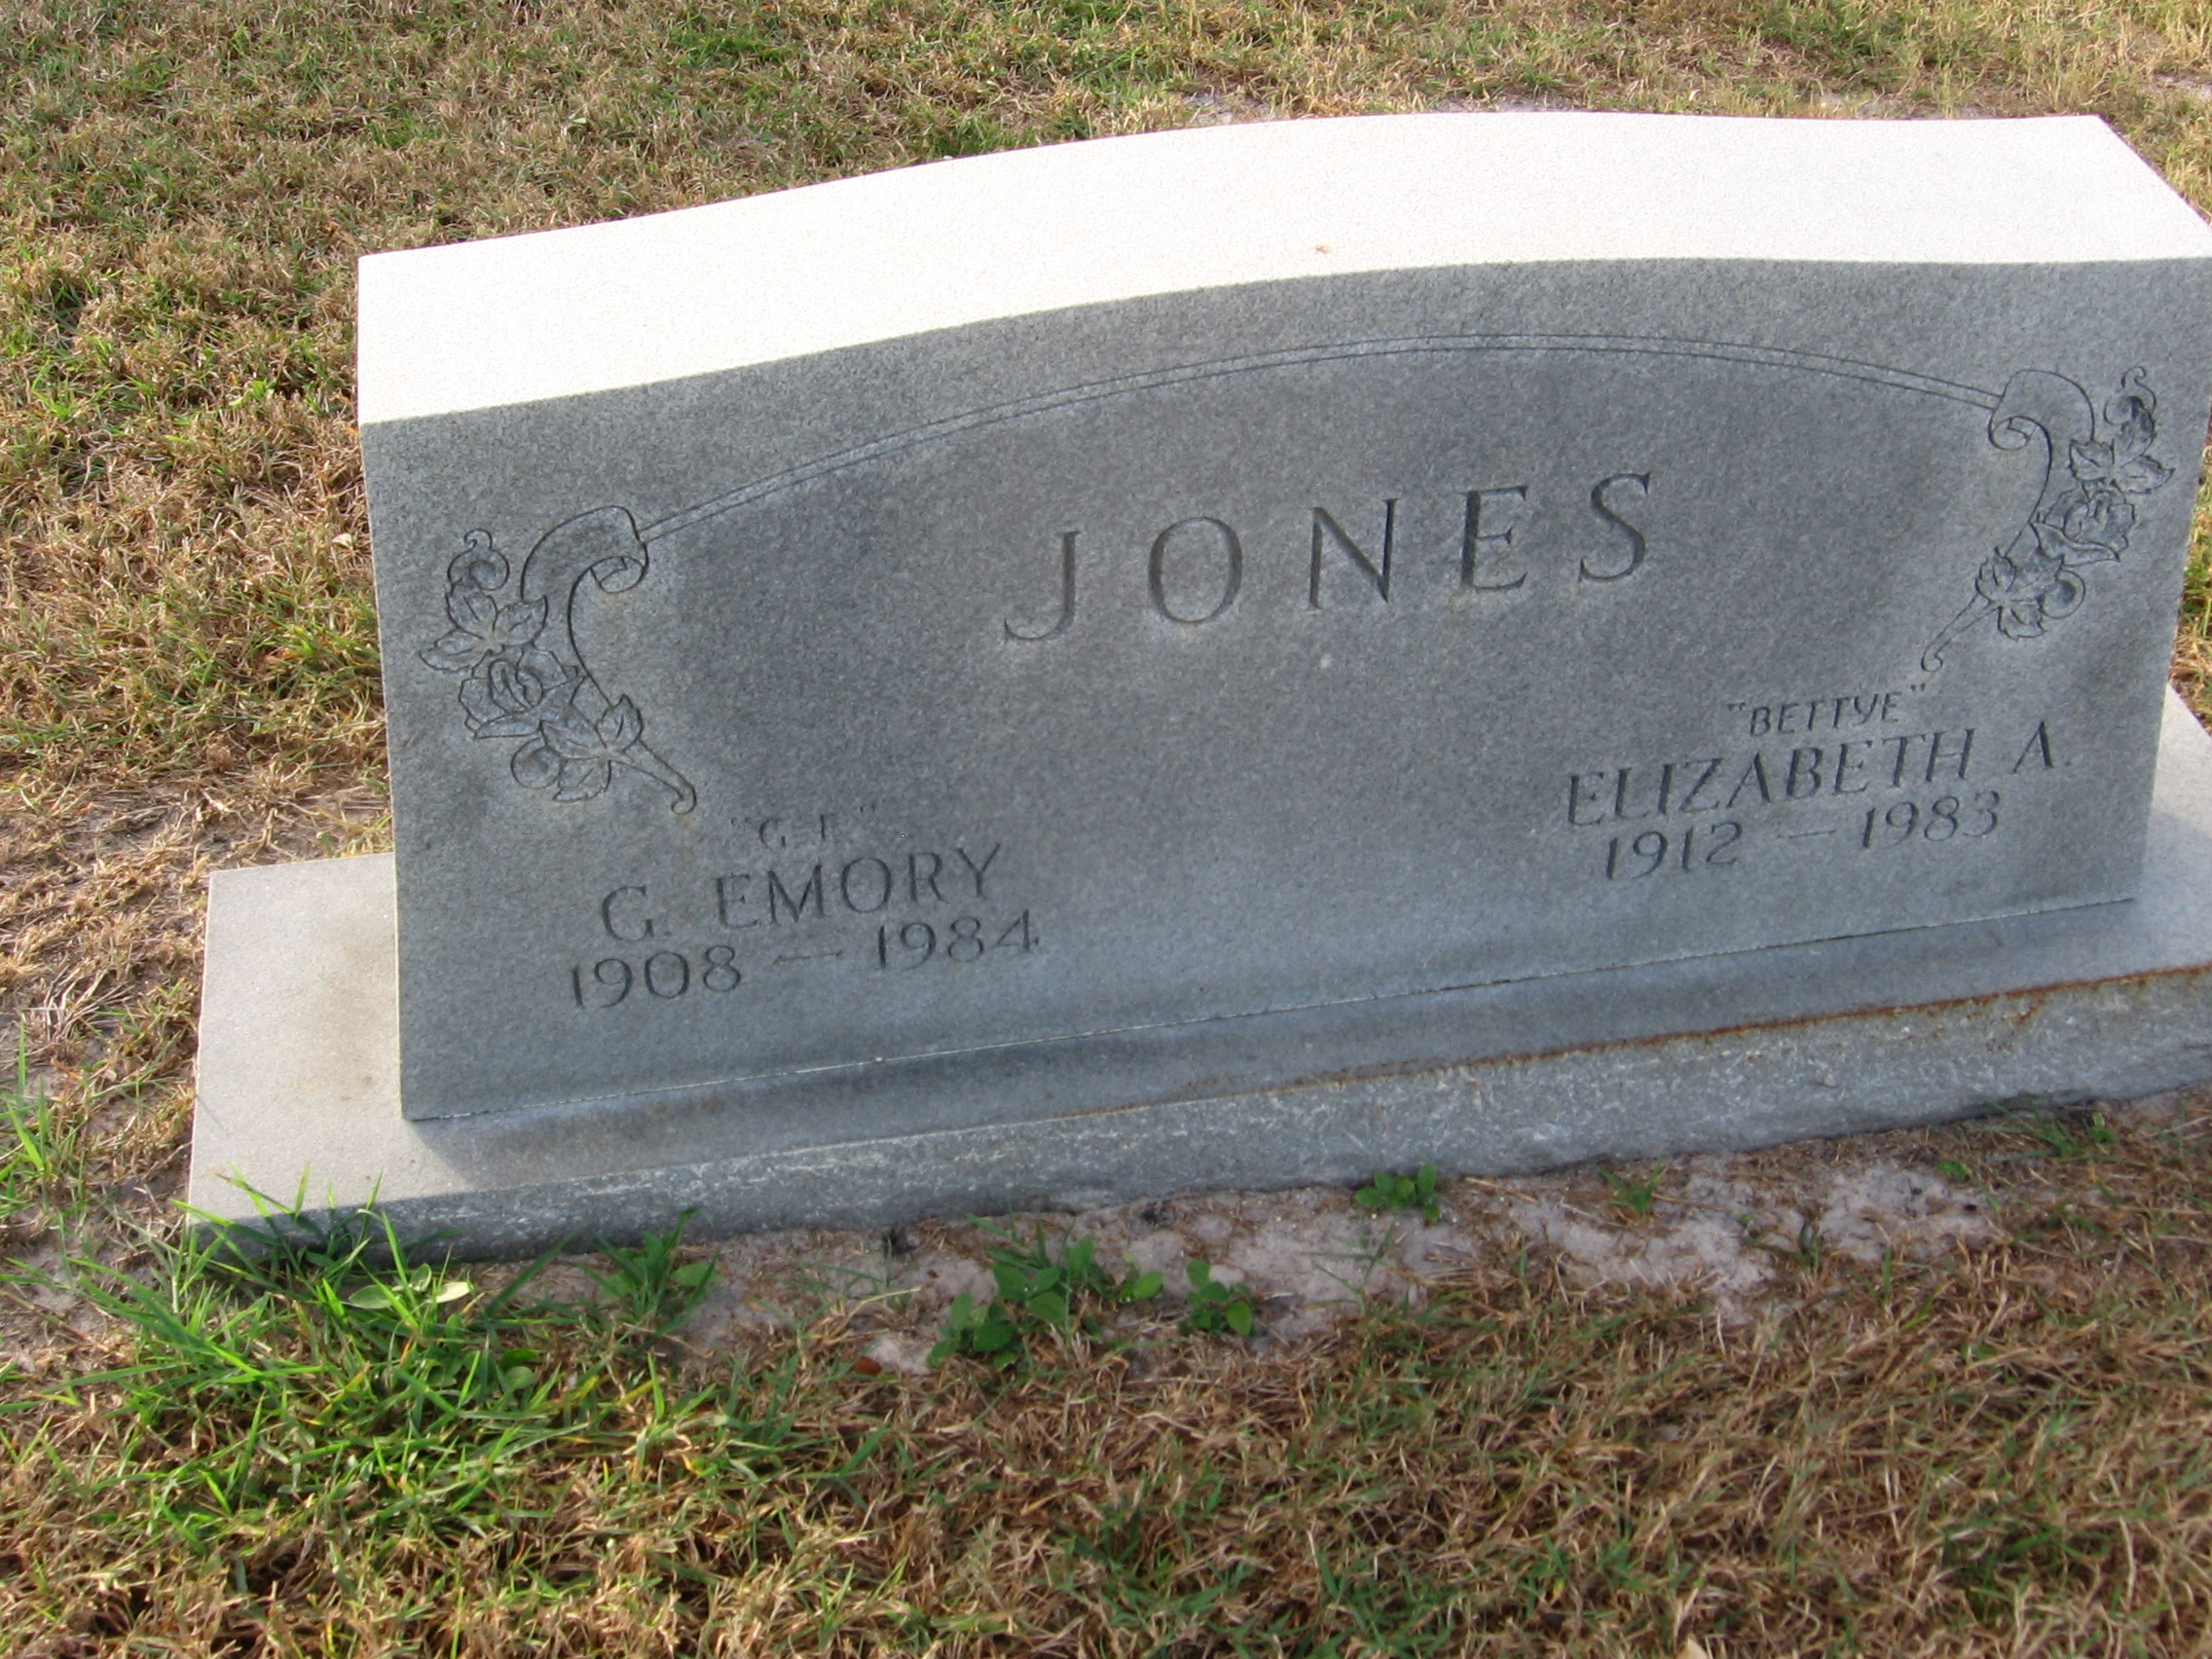 G Emory Jones